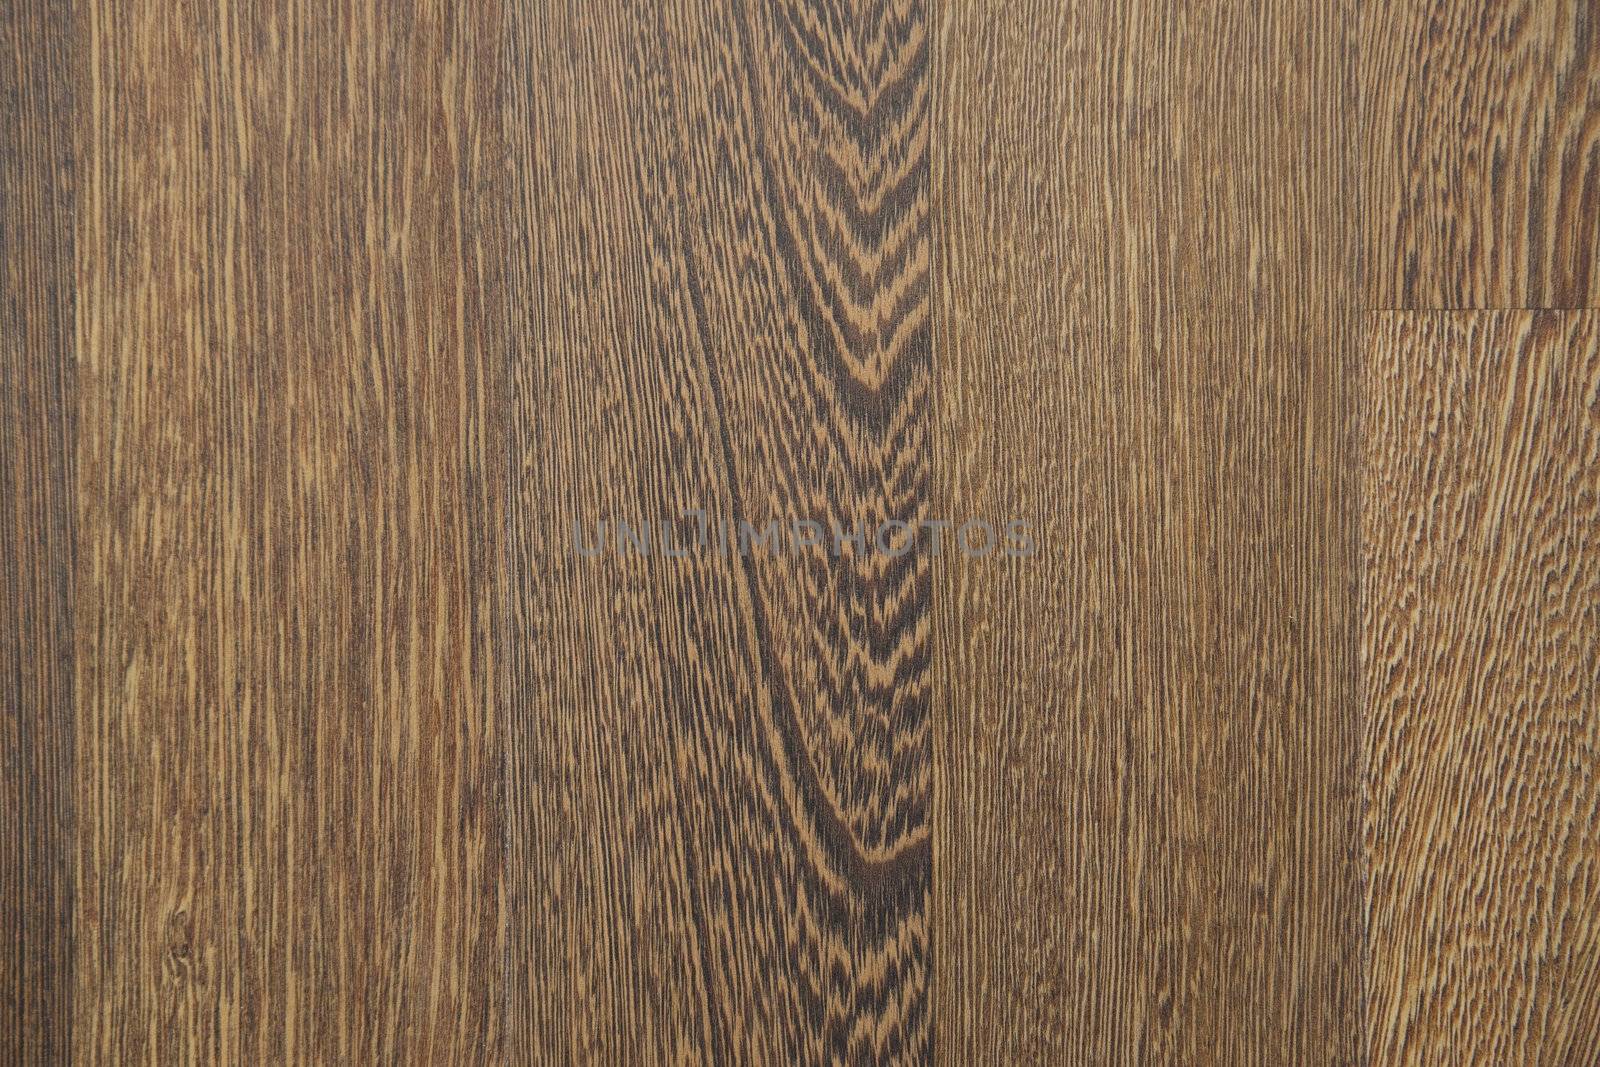 wooden background - fragment of parquet floor